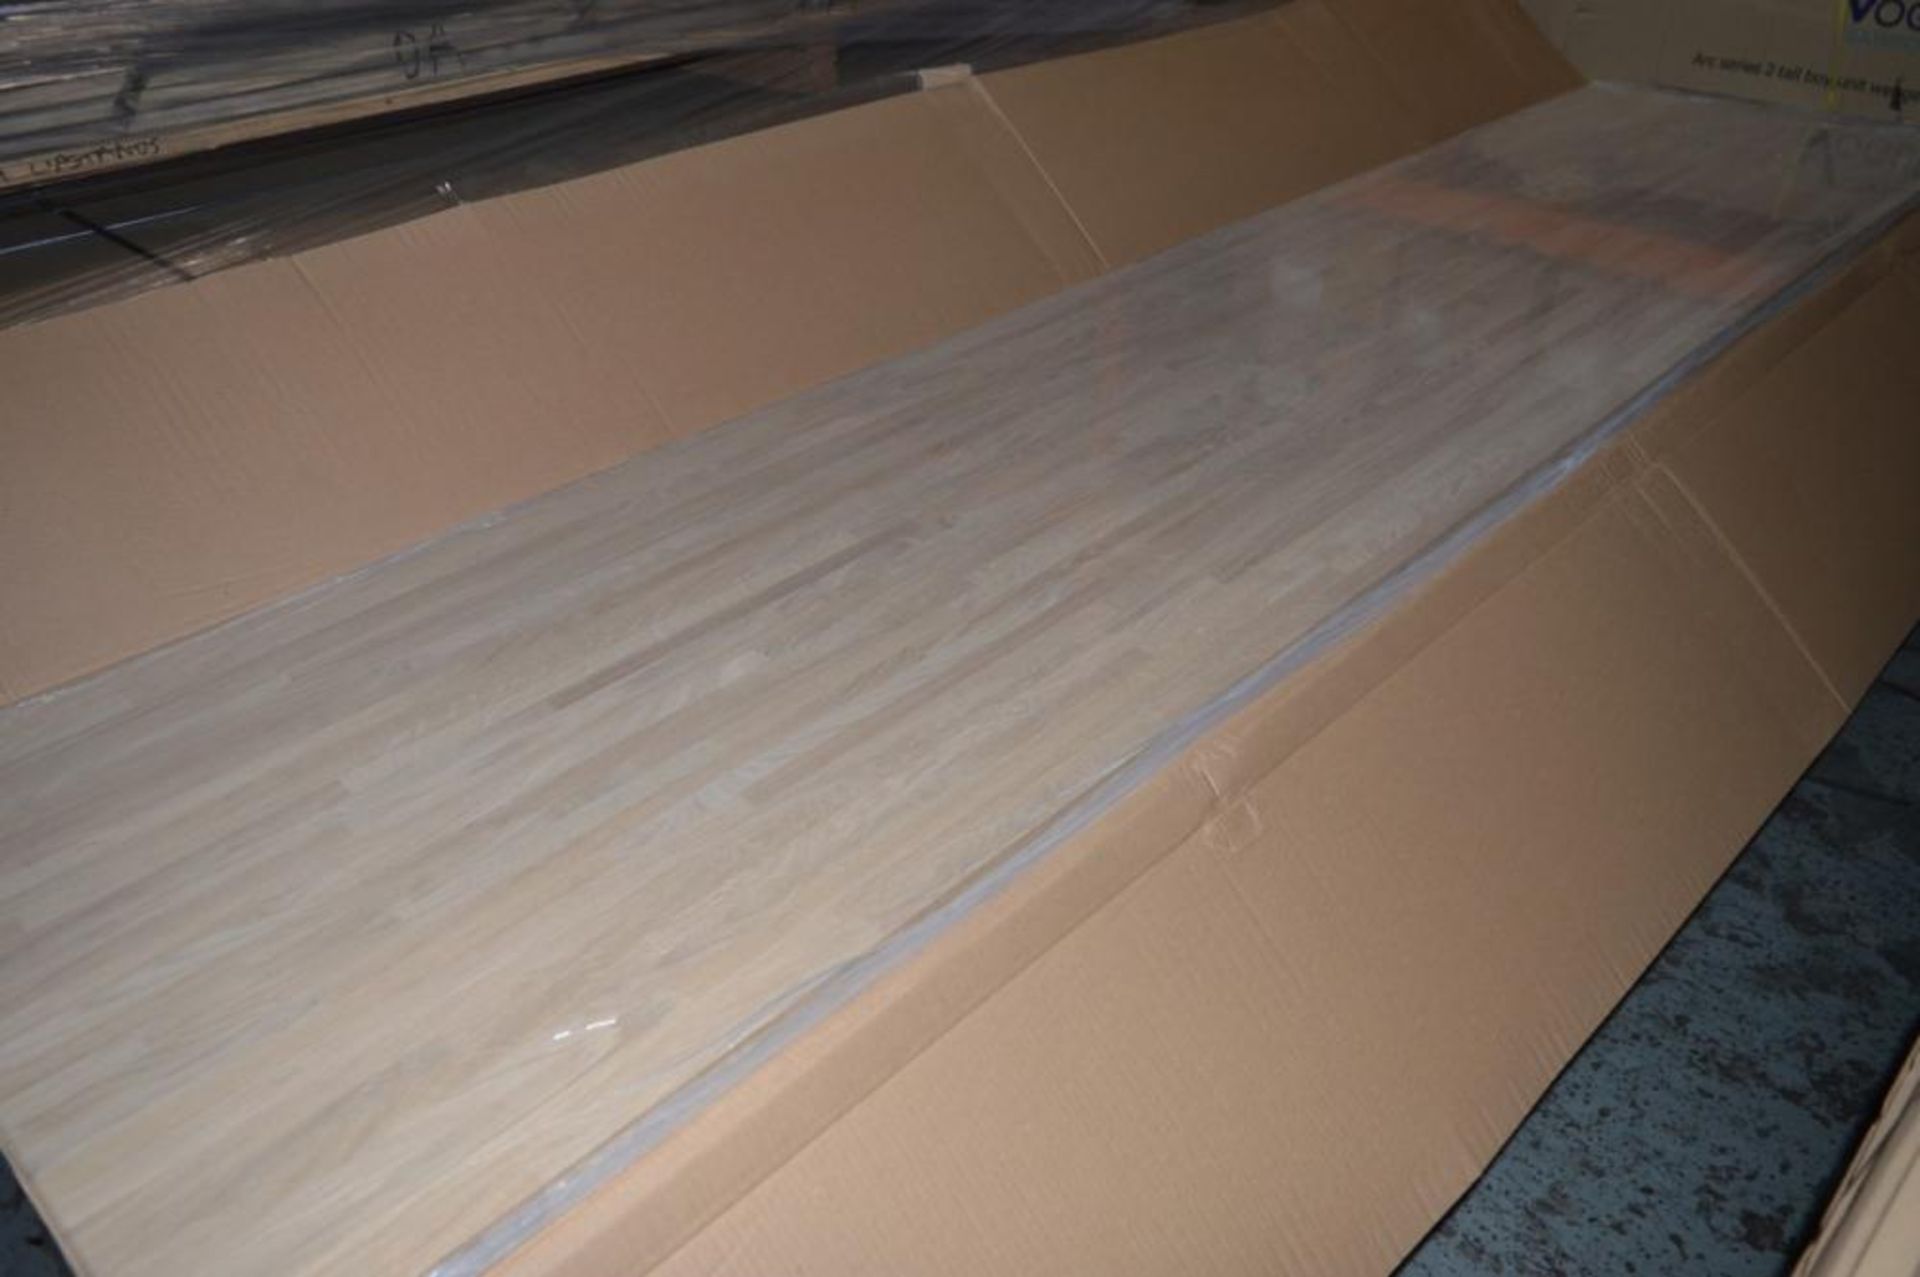 1 x Solid Wood Kitchen Worktop - OAK - Oak Blockwood Kitchen Worktop - Size: 3000 x 900 x 32mm - - Image 3 of 3